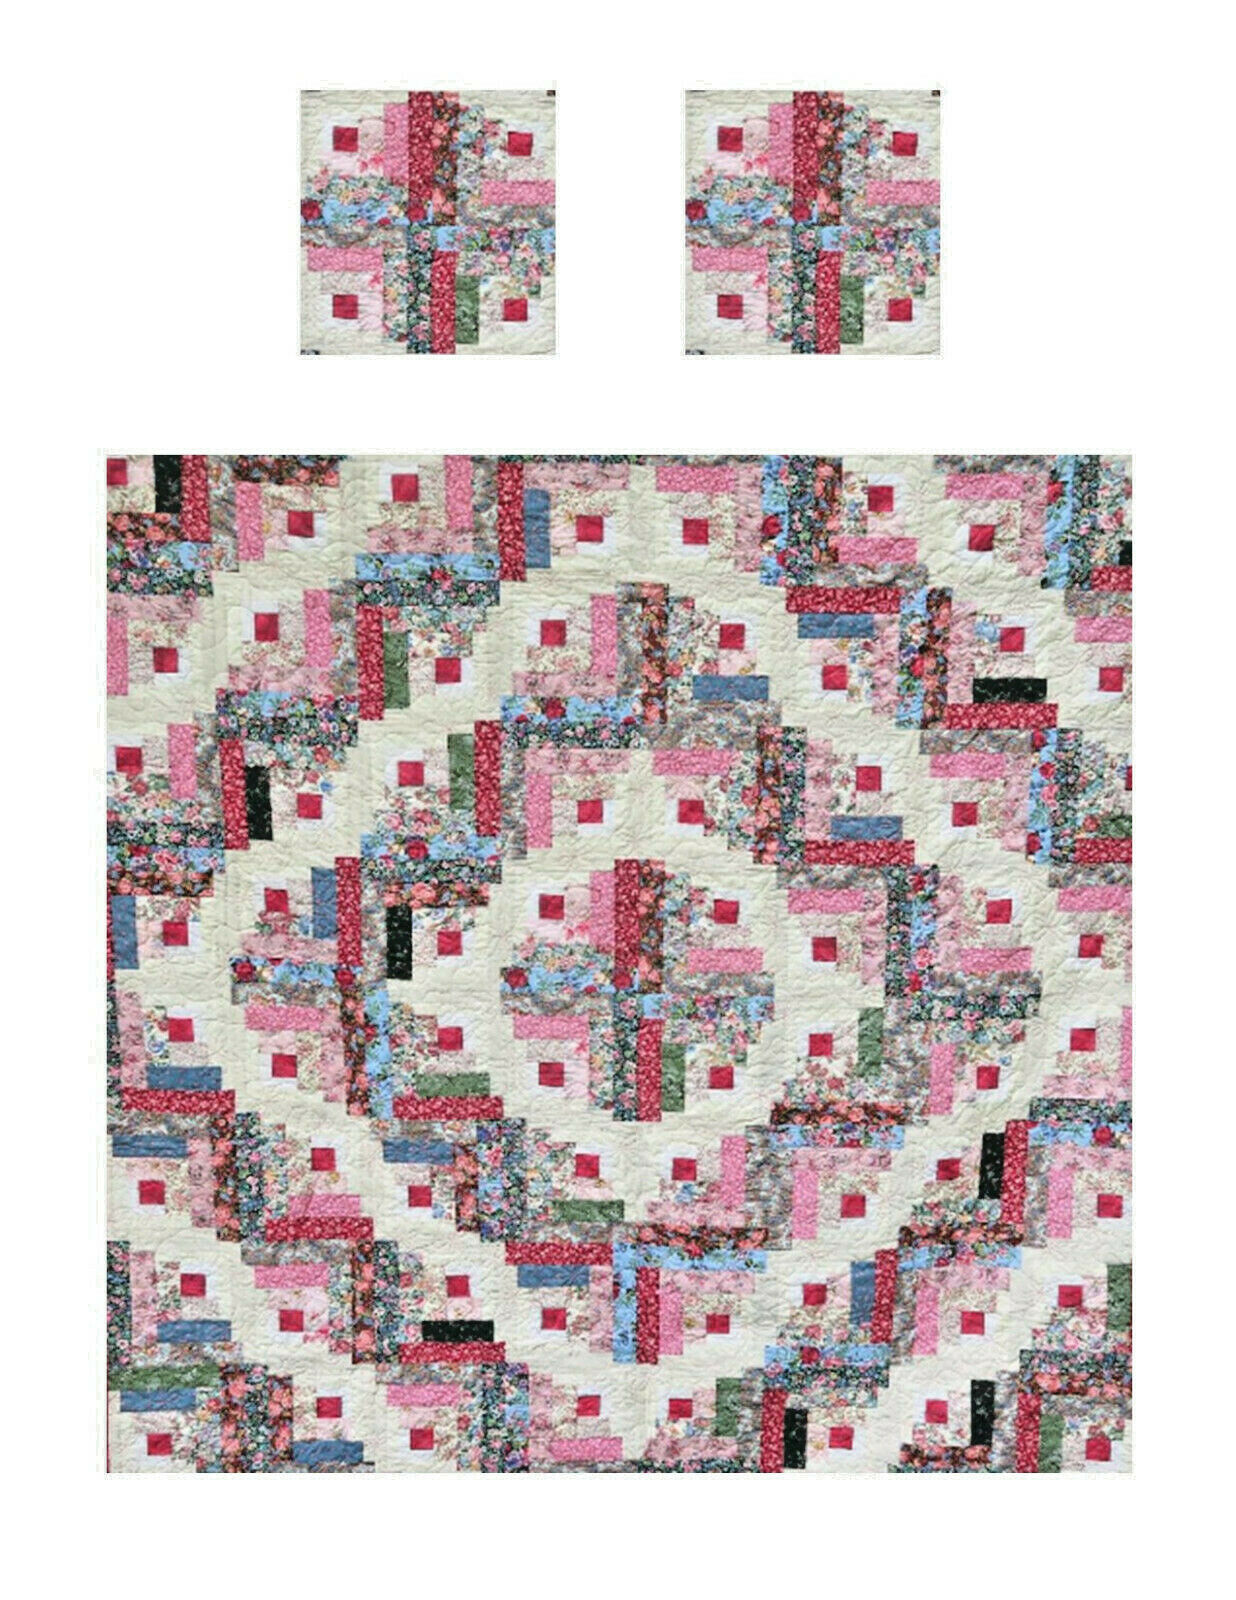 Miniature Dollhouse Pink Garden Quilt Top Computer Printed Fabric new